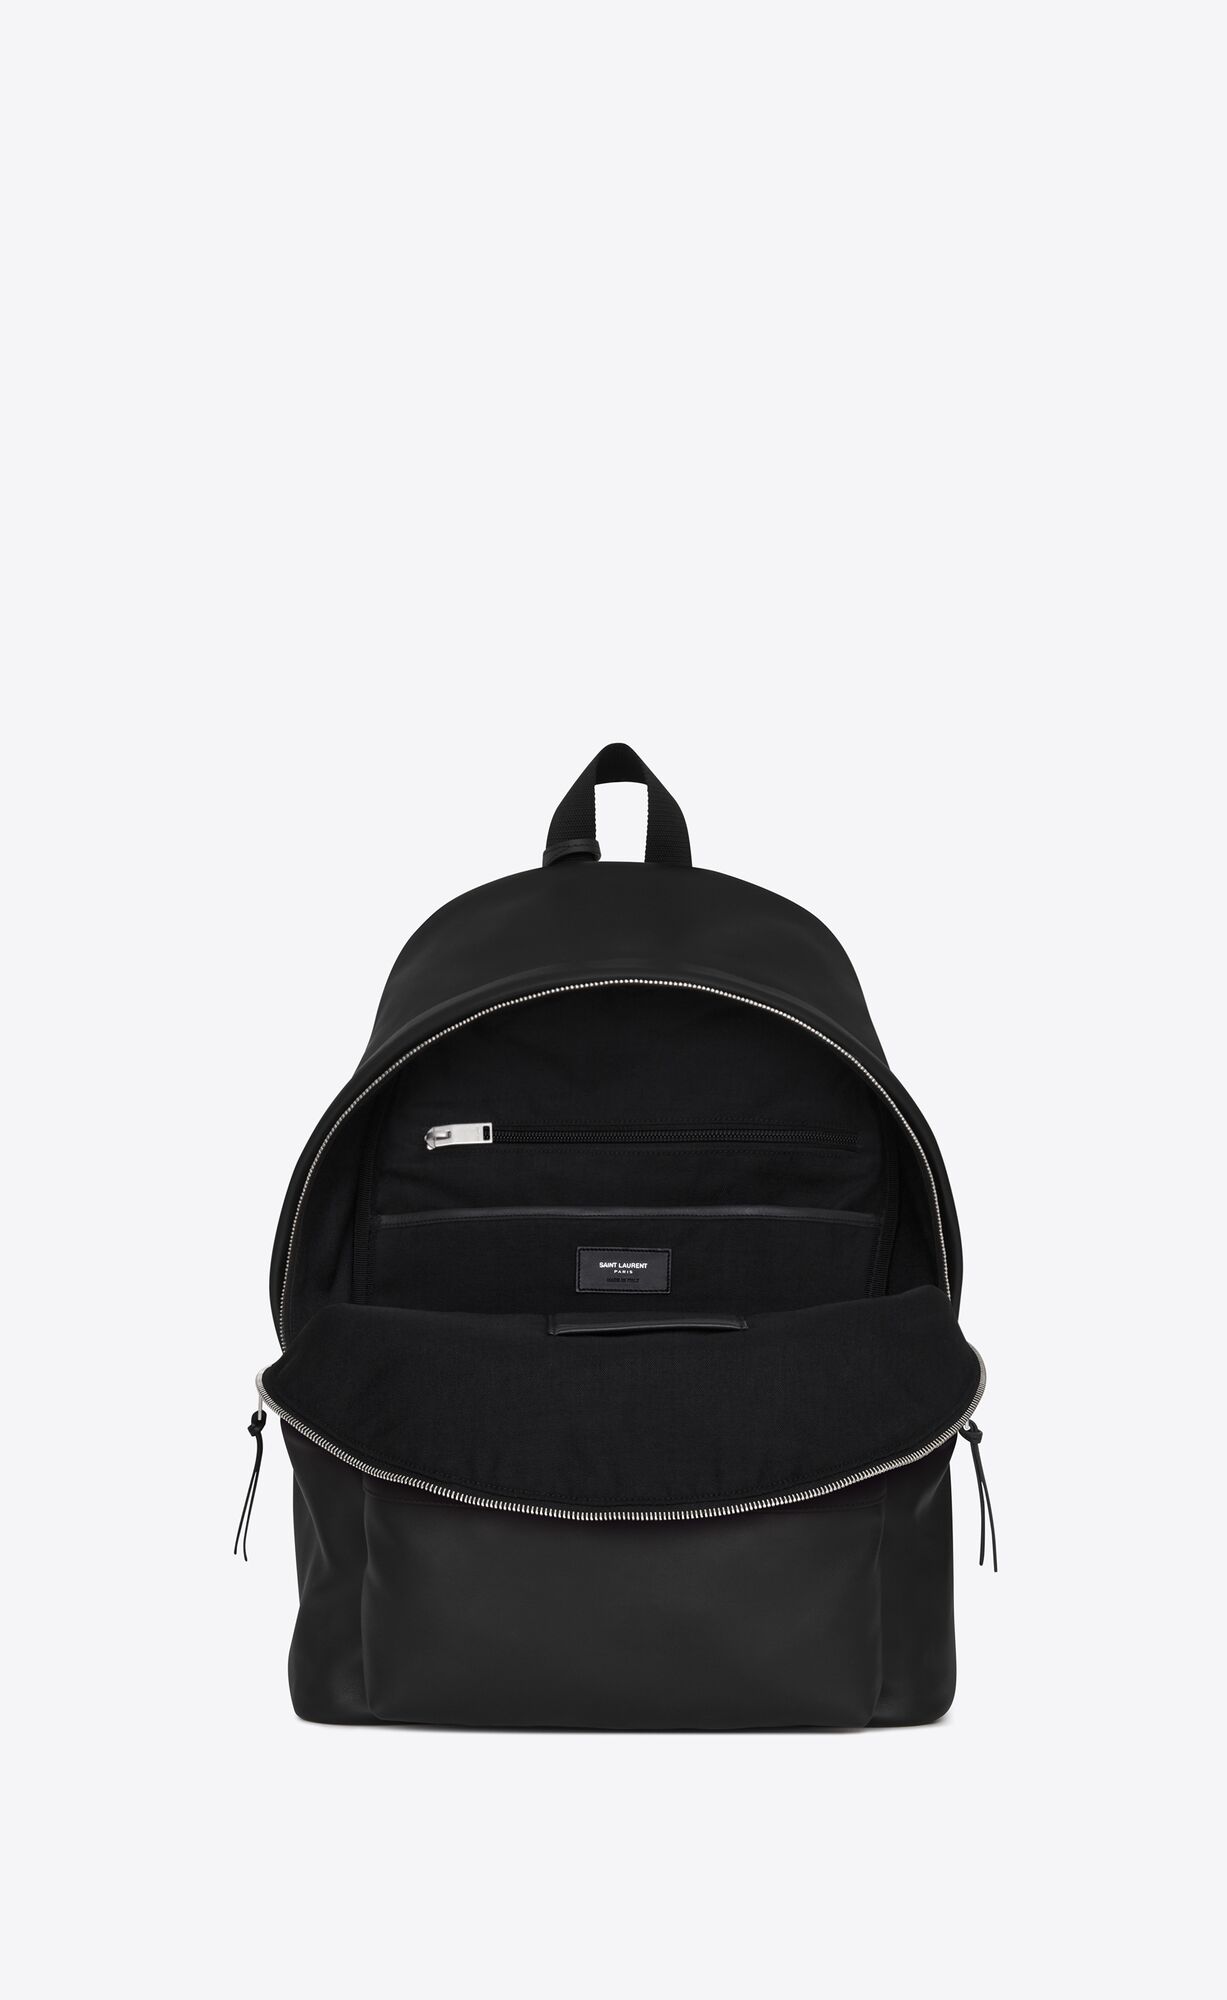 City backpack in matte leather | Saint Laurent | YSL.com